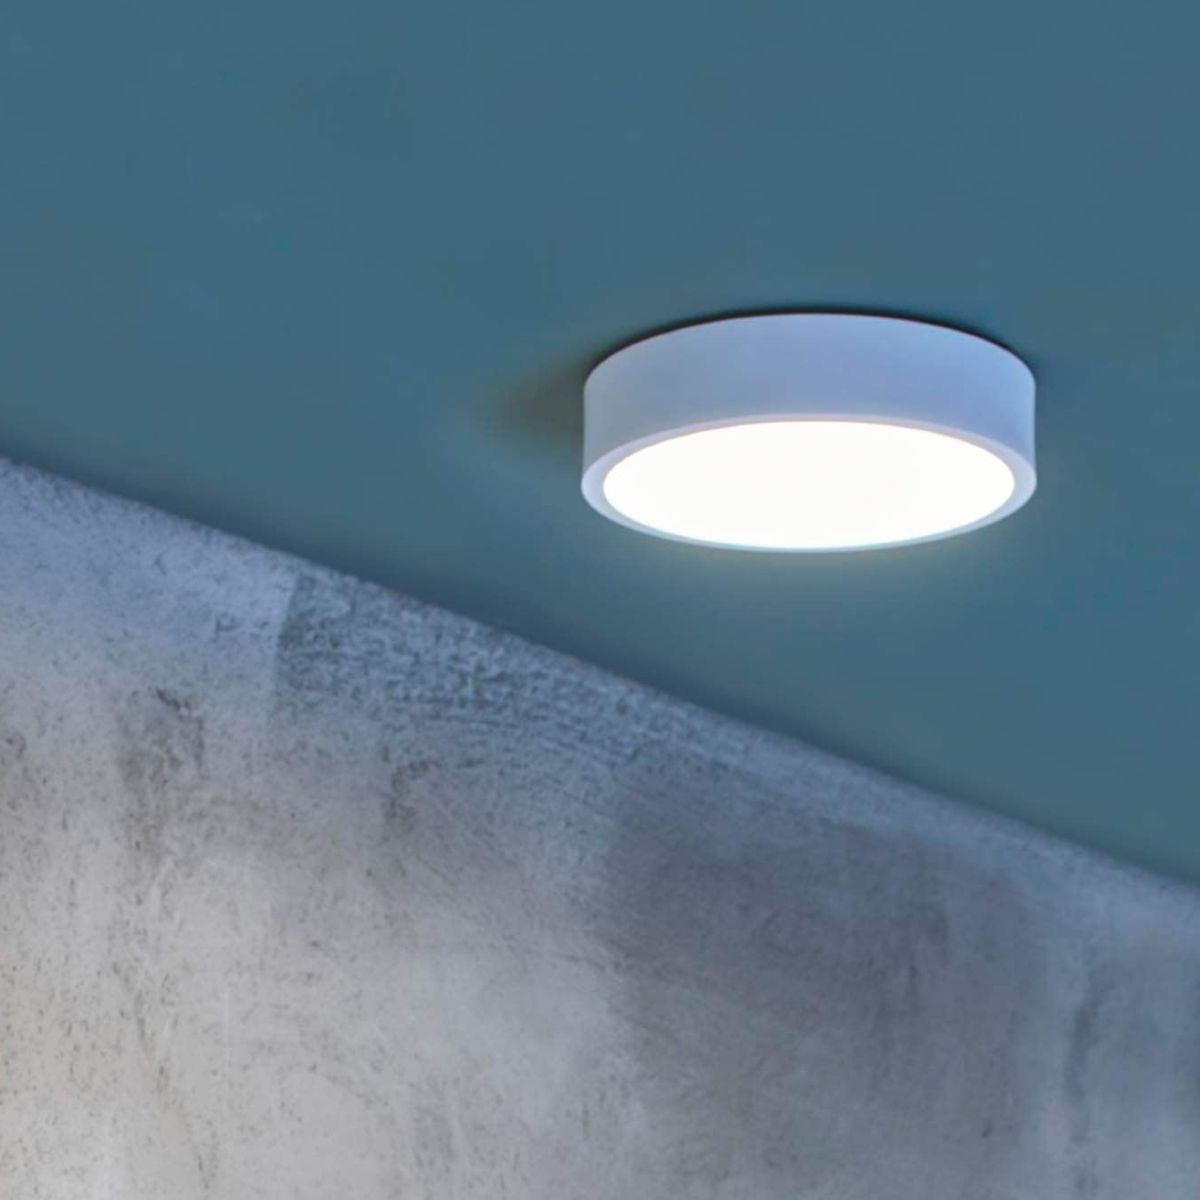 Philips Star Surface LED Ceiling light